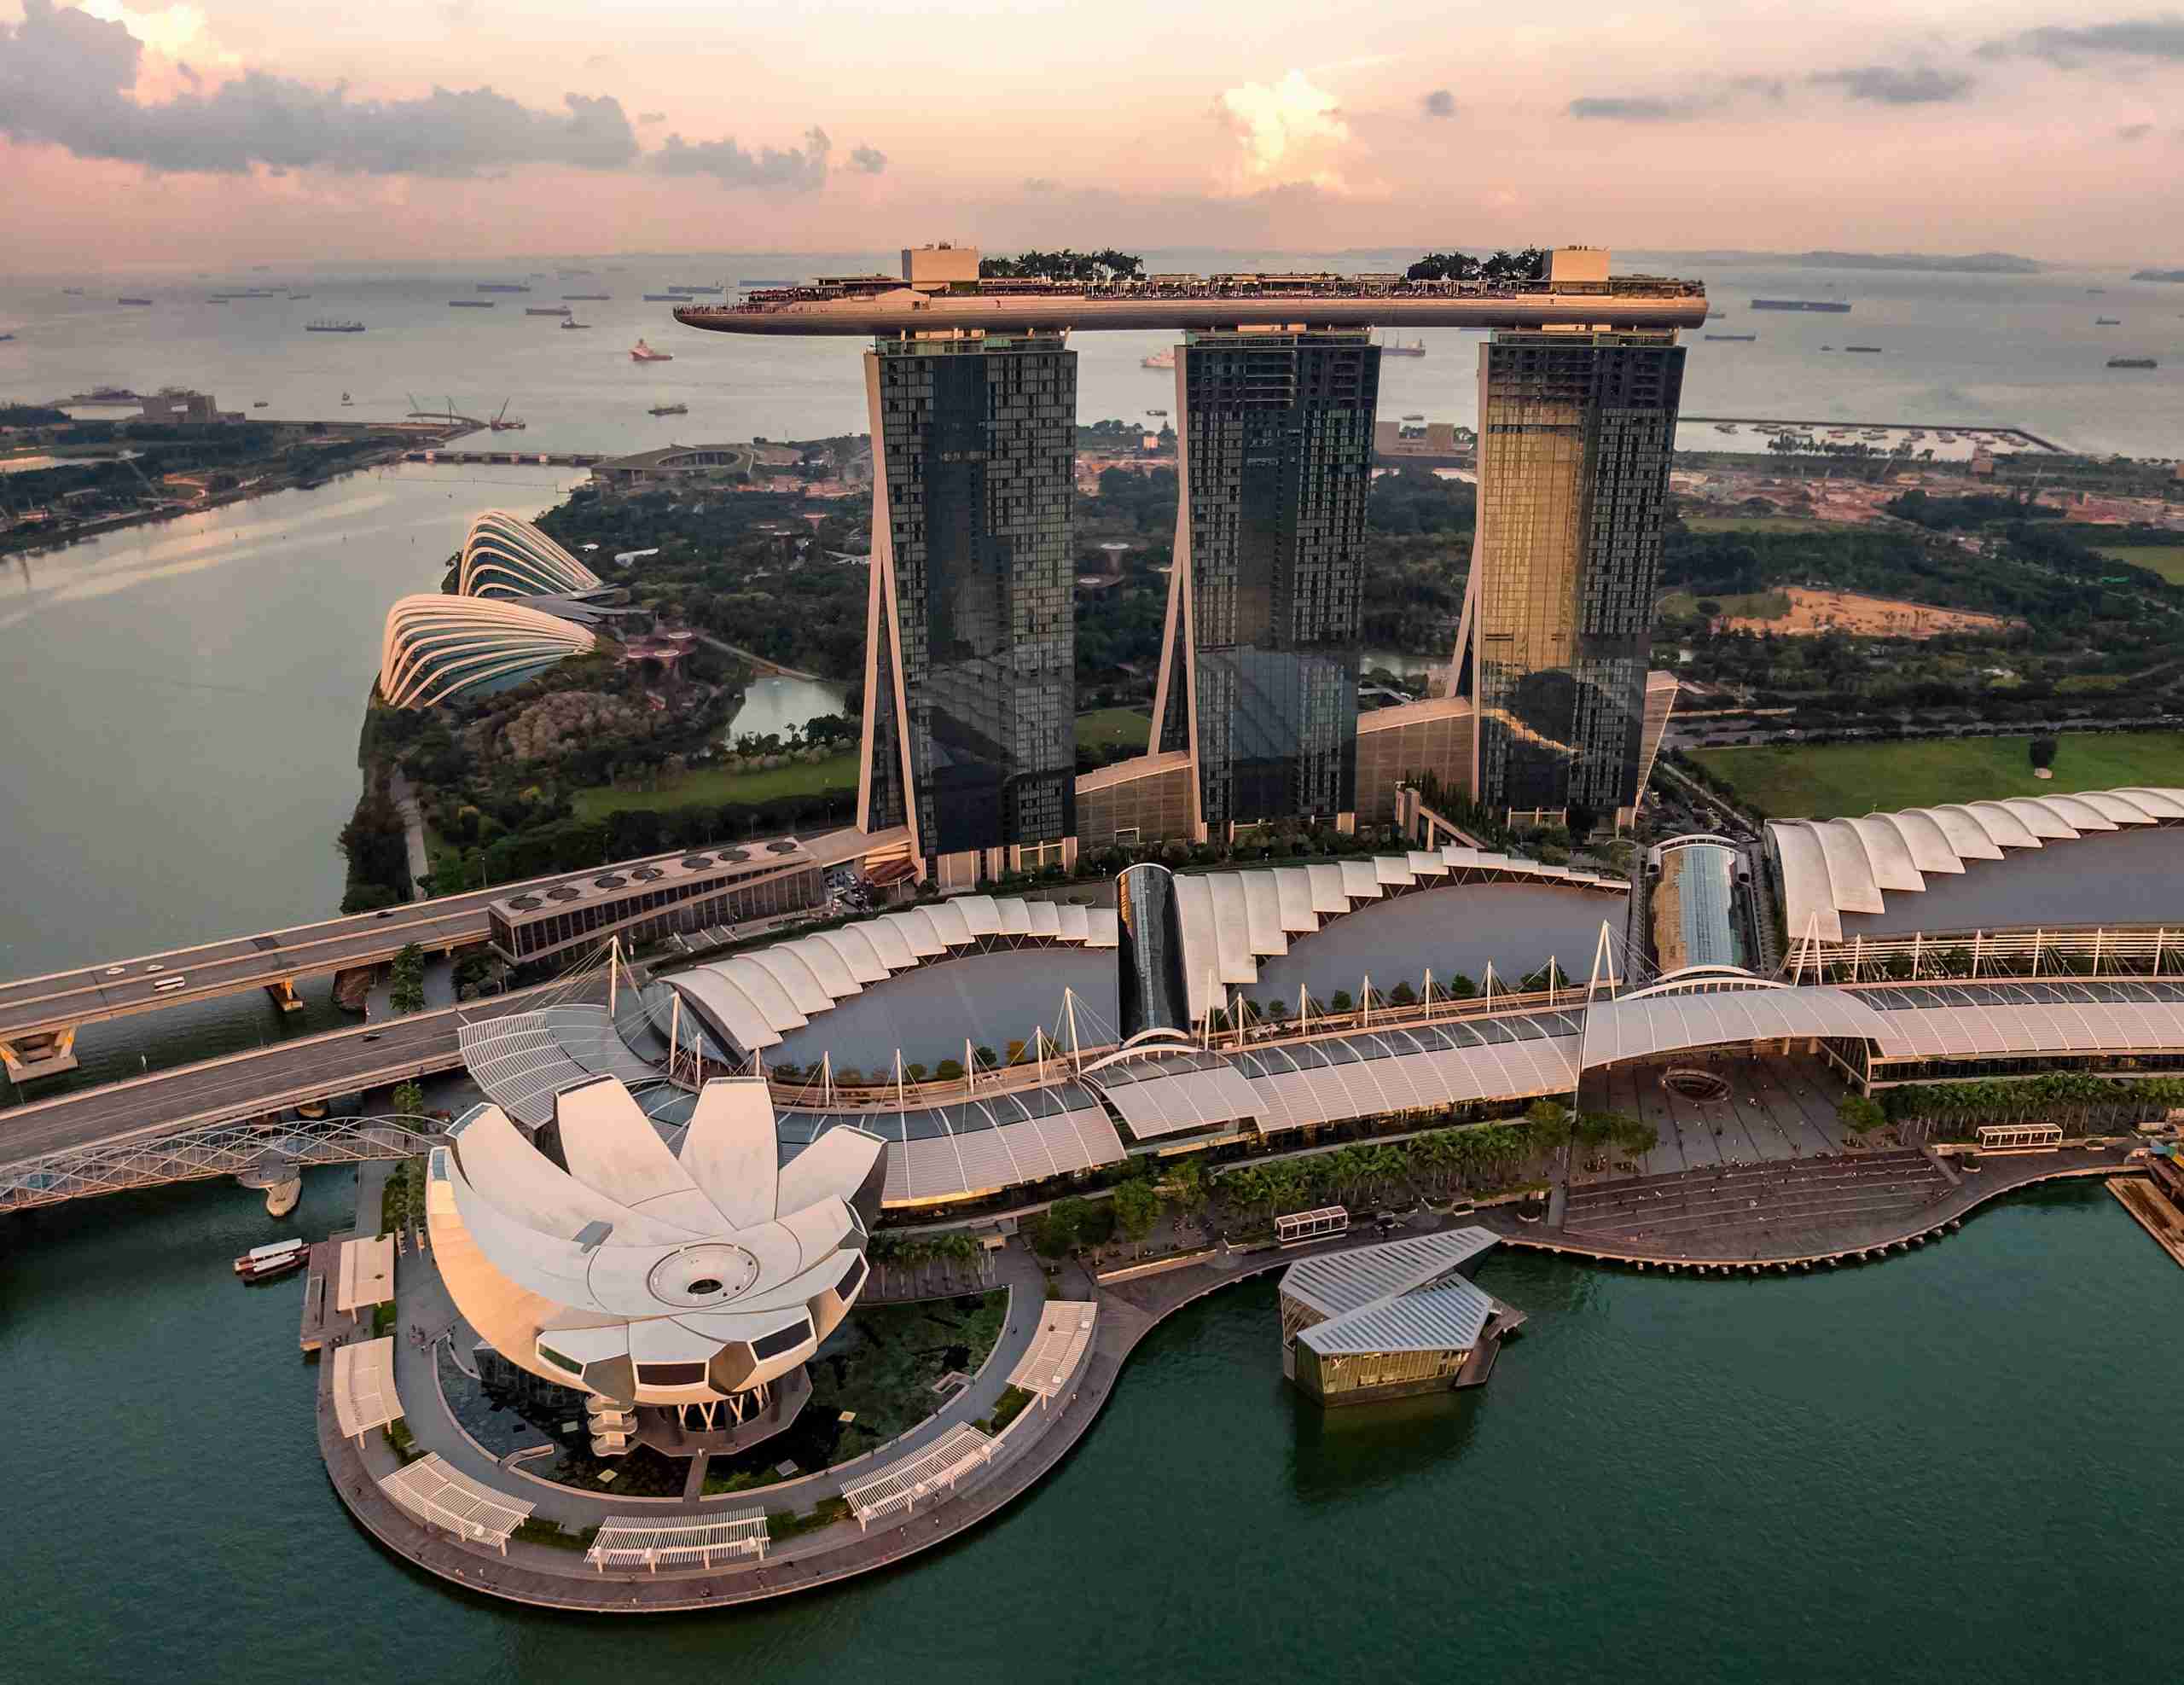 Skyline view of Singapore Marina Bay